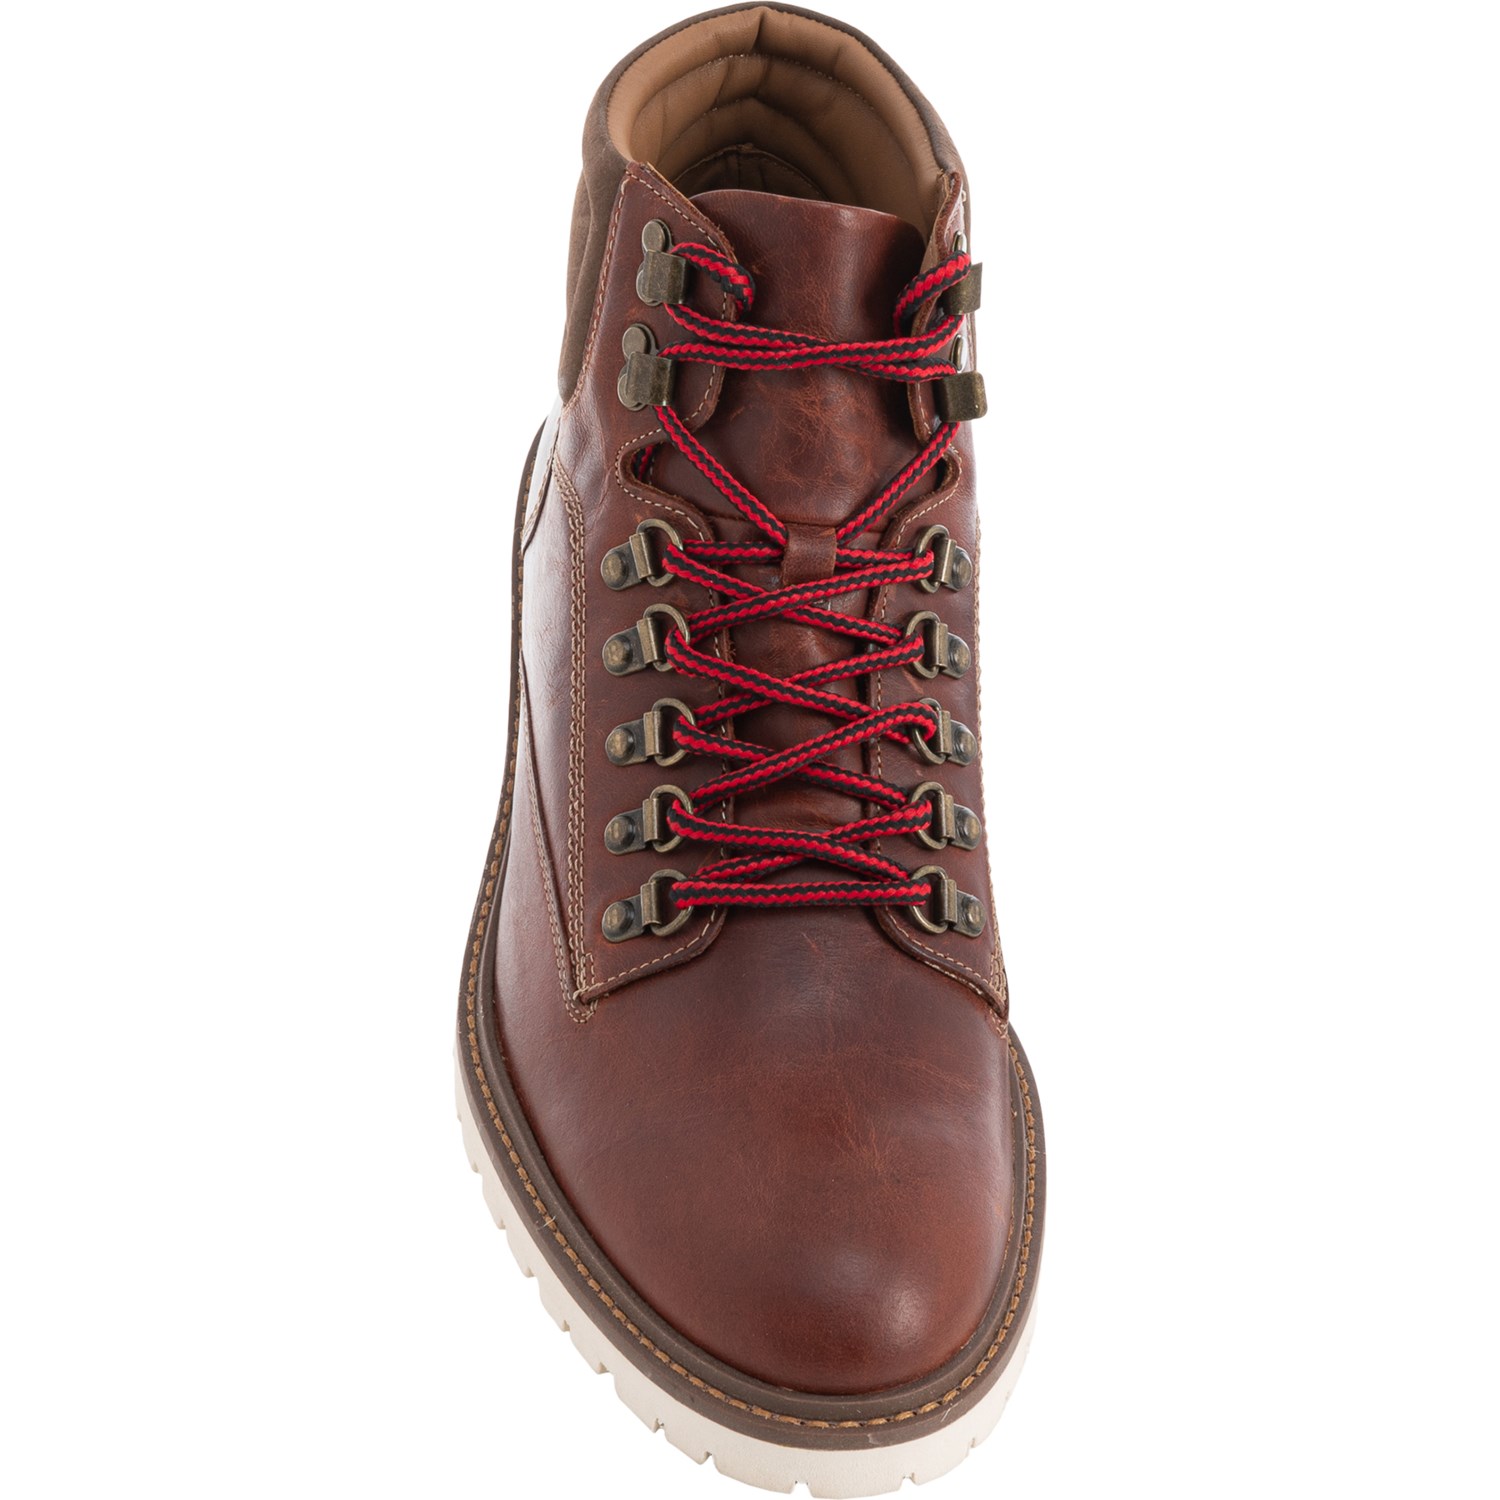 Johnston & Murphy Barrett Alpine Boots (For Men) - Save 28%